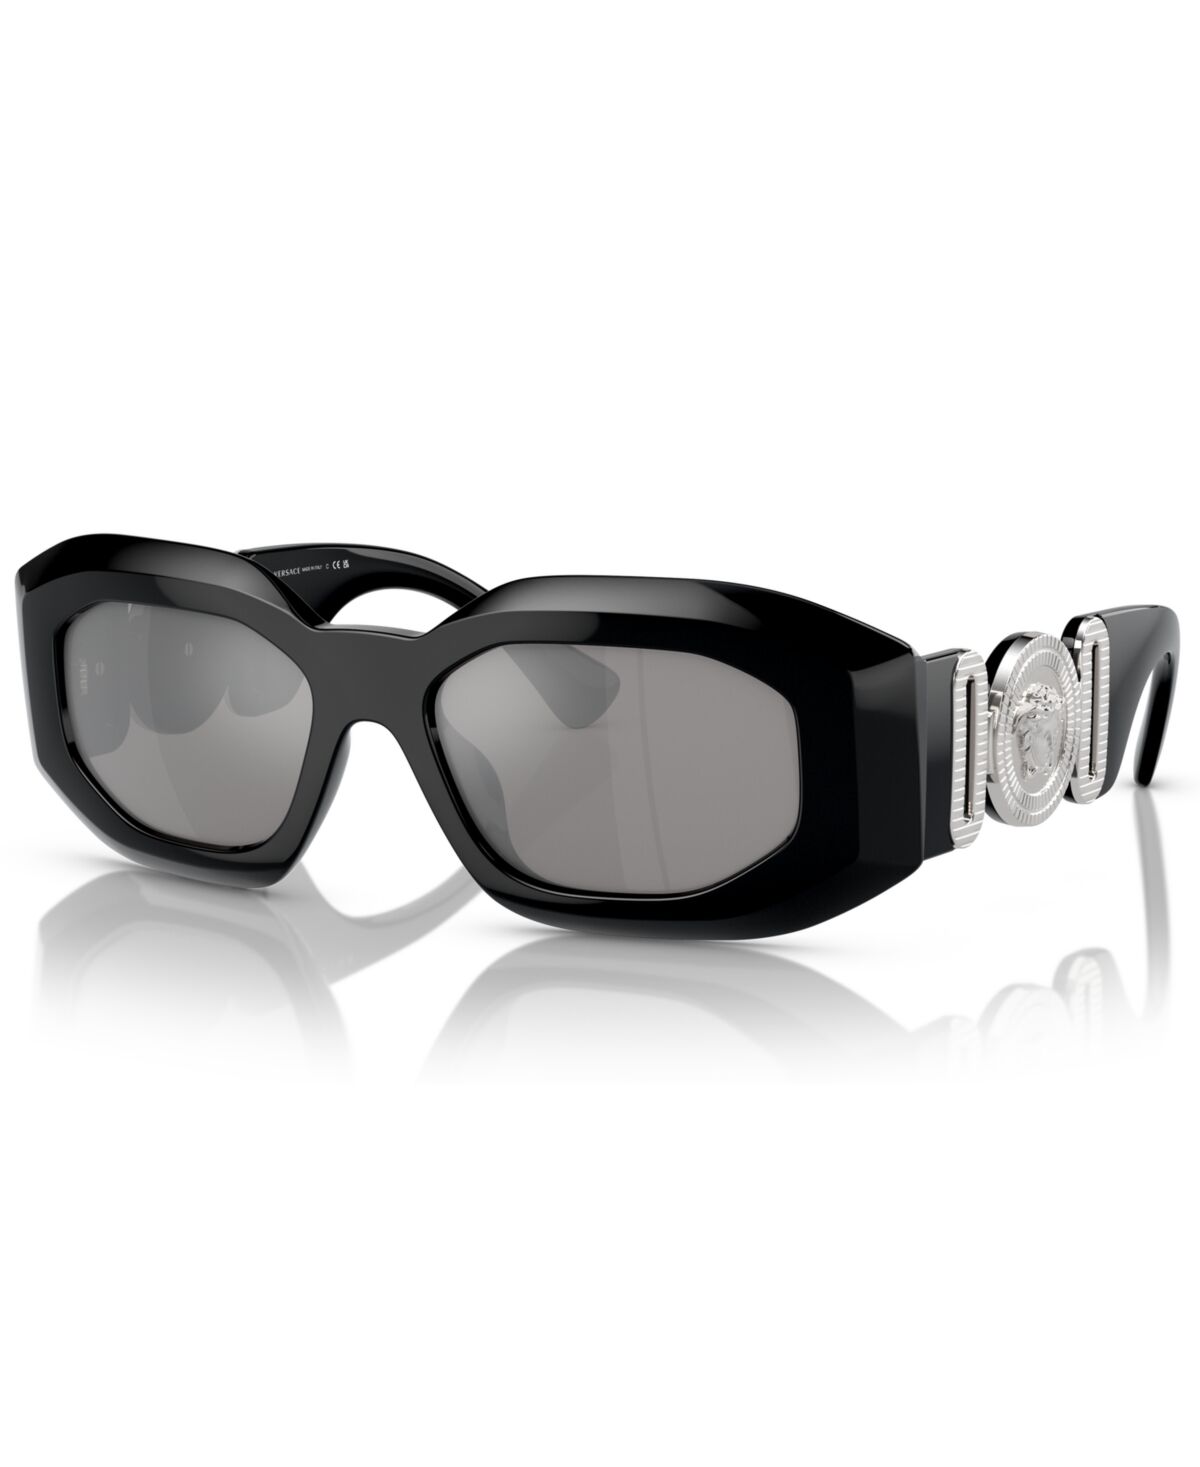 Versace Unisex Sunglasses, VE4425U - Black/Mirrored